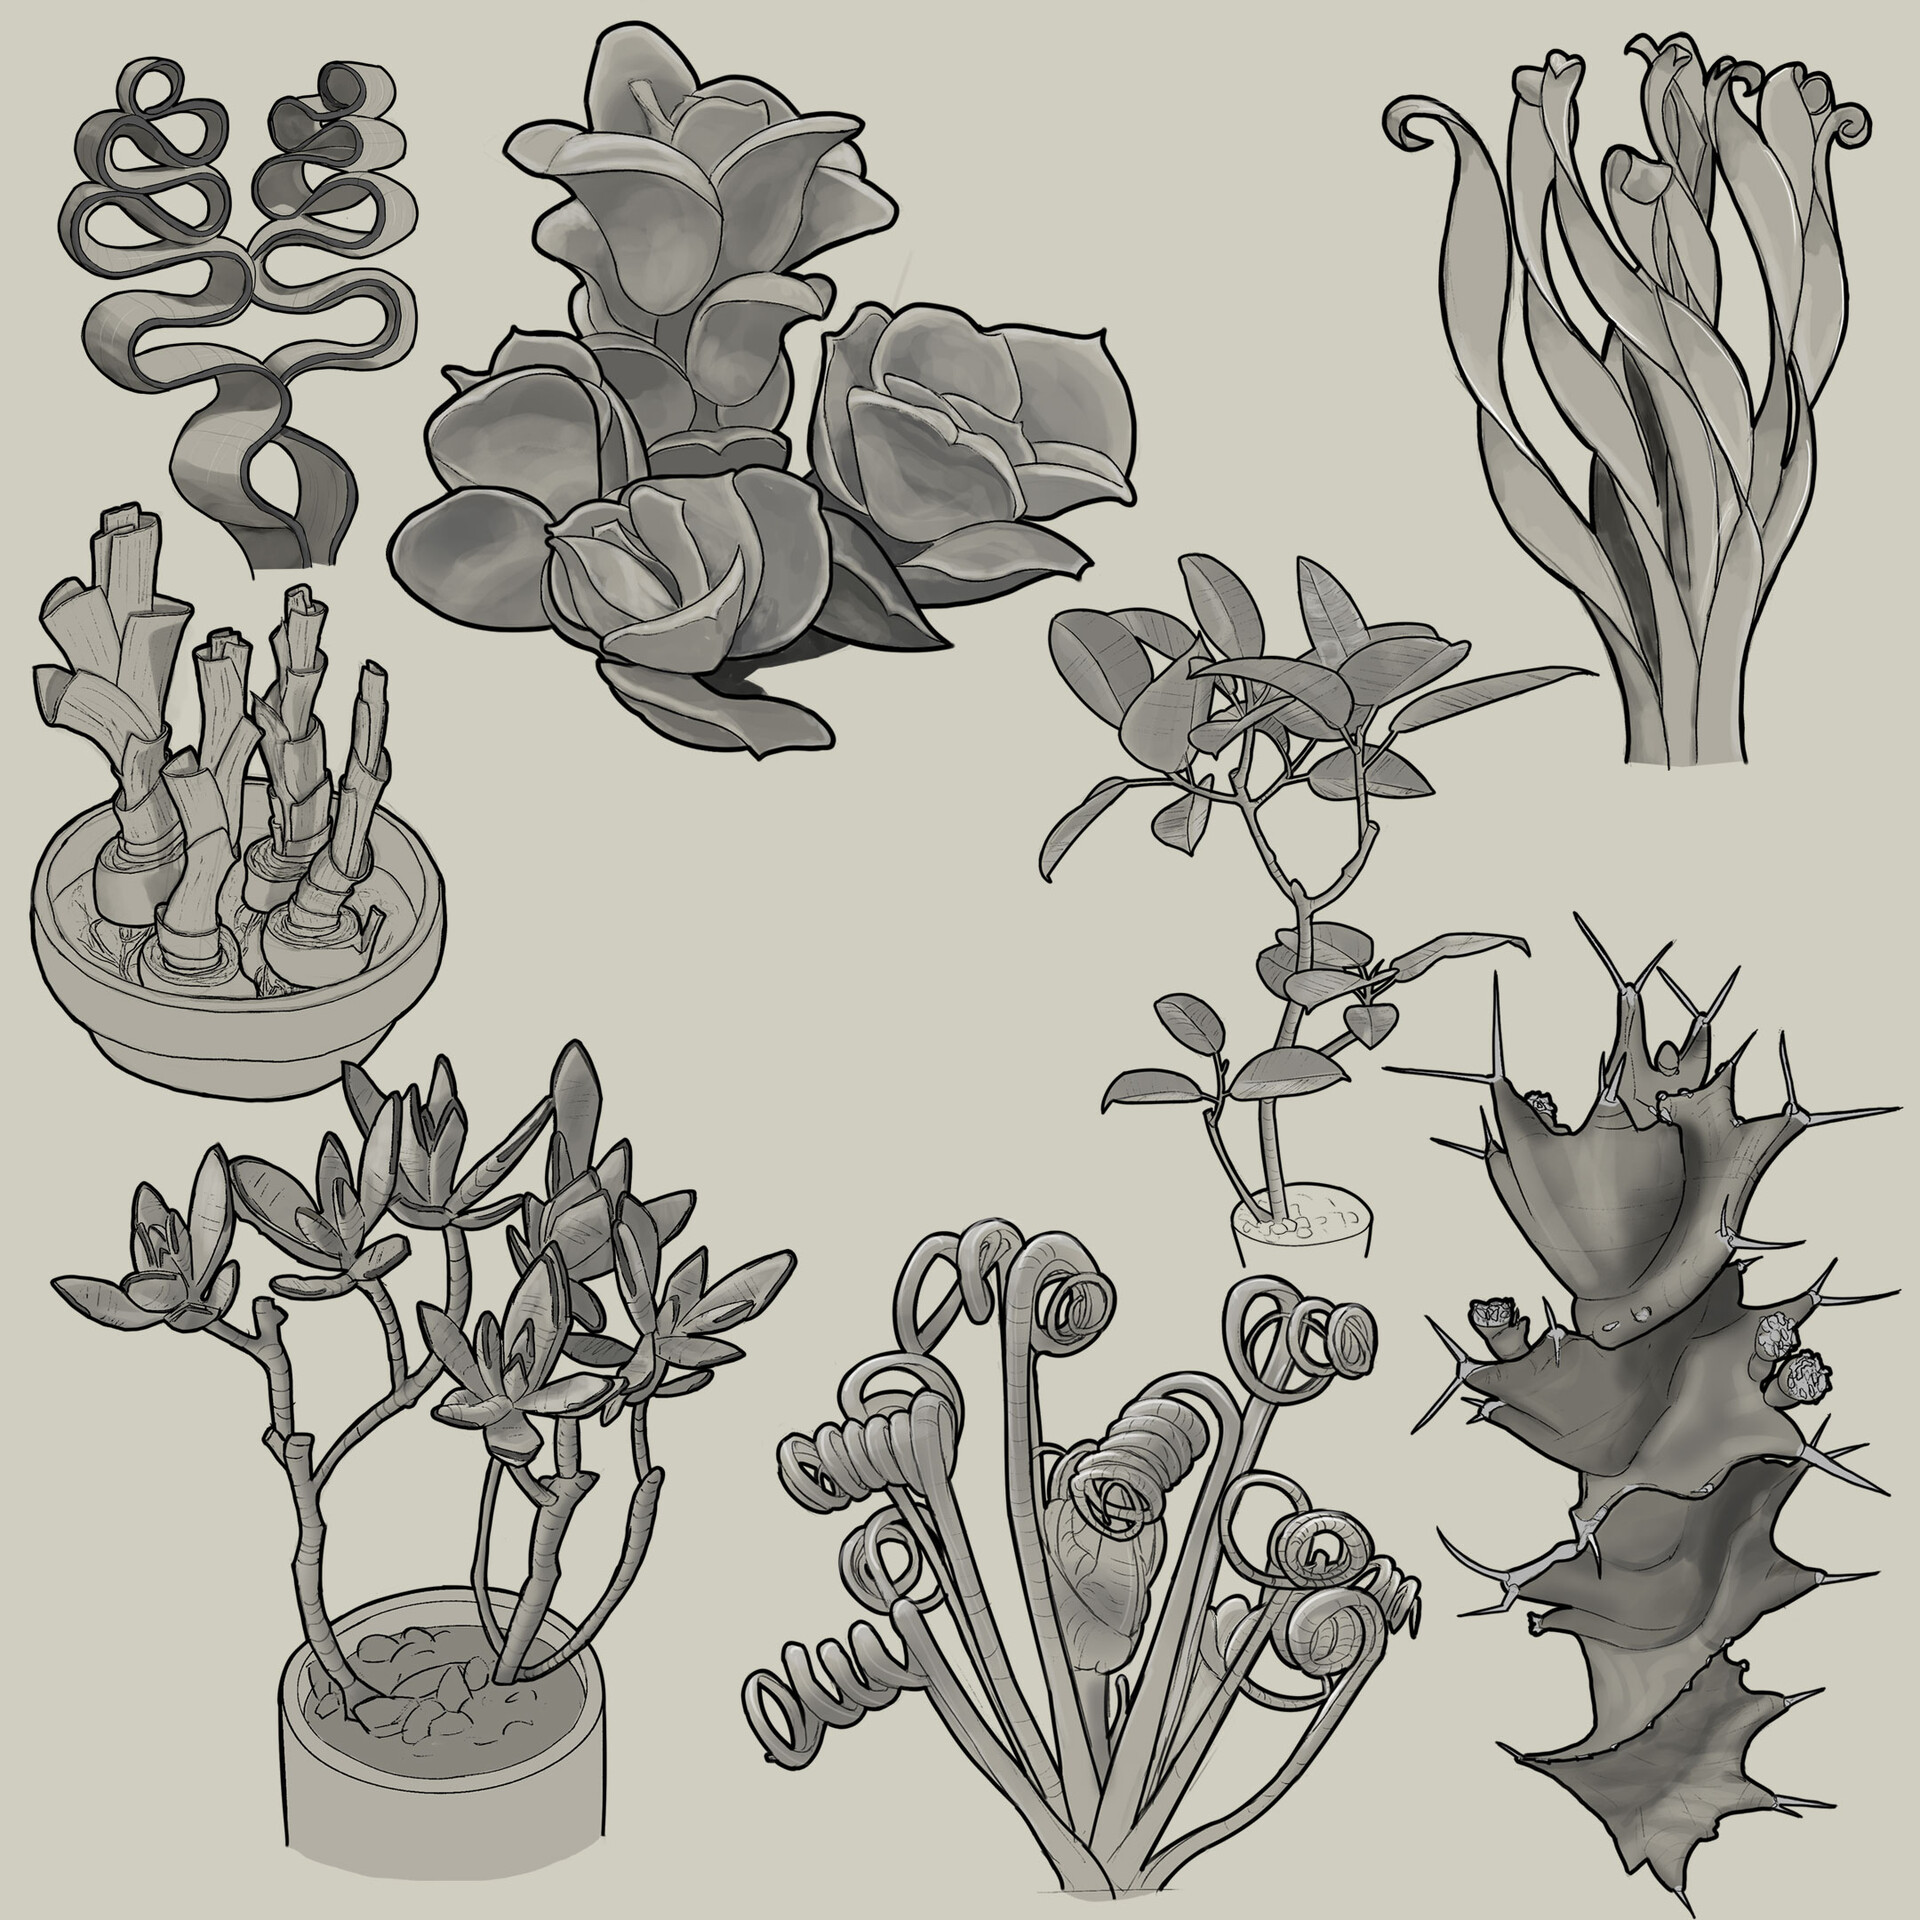 ArtStation - Plants studies